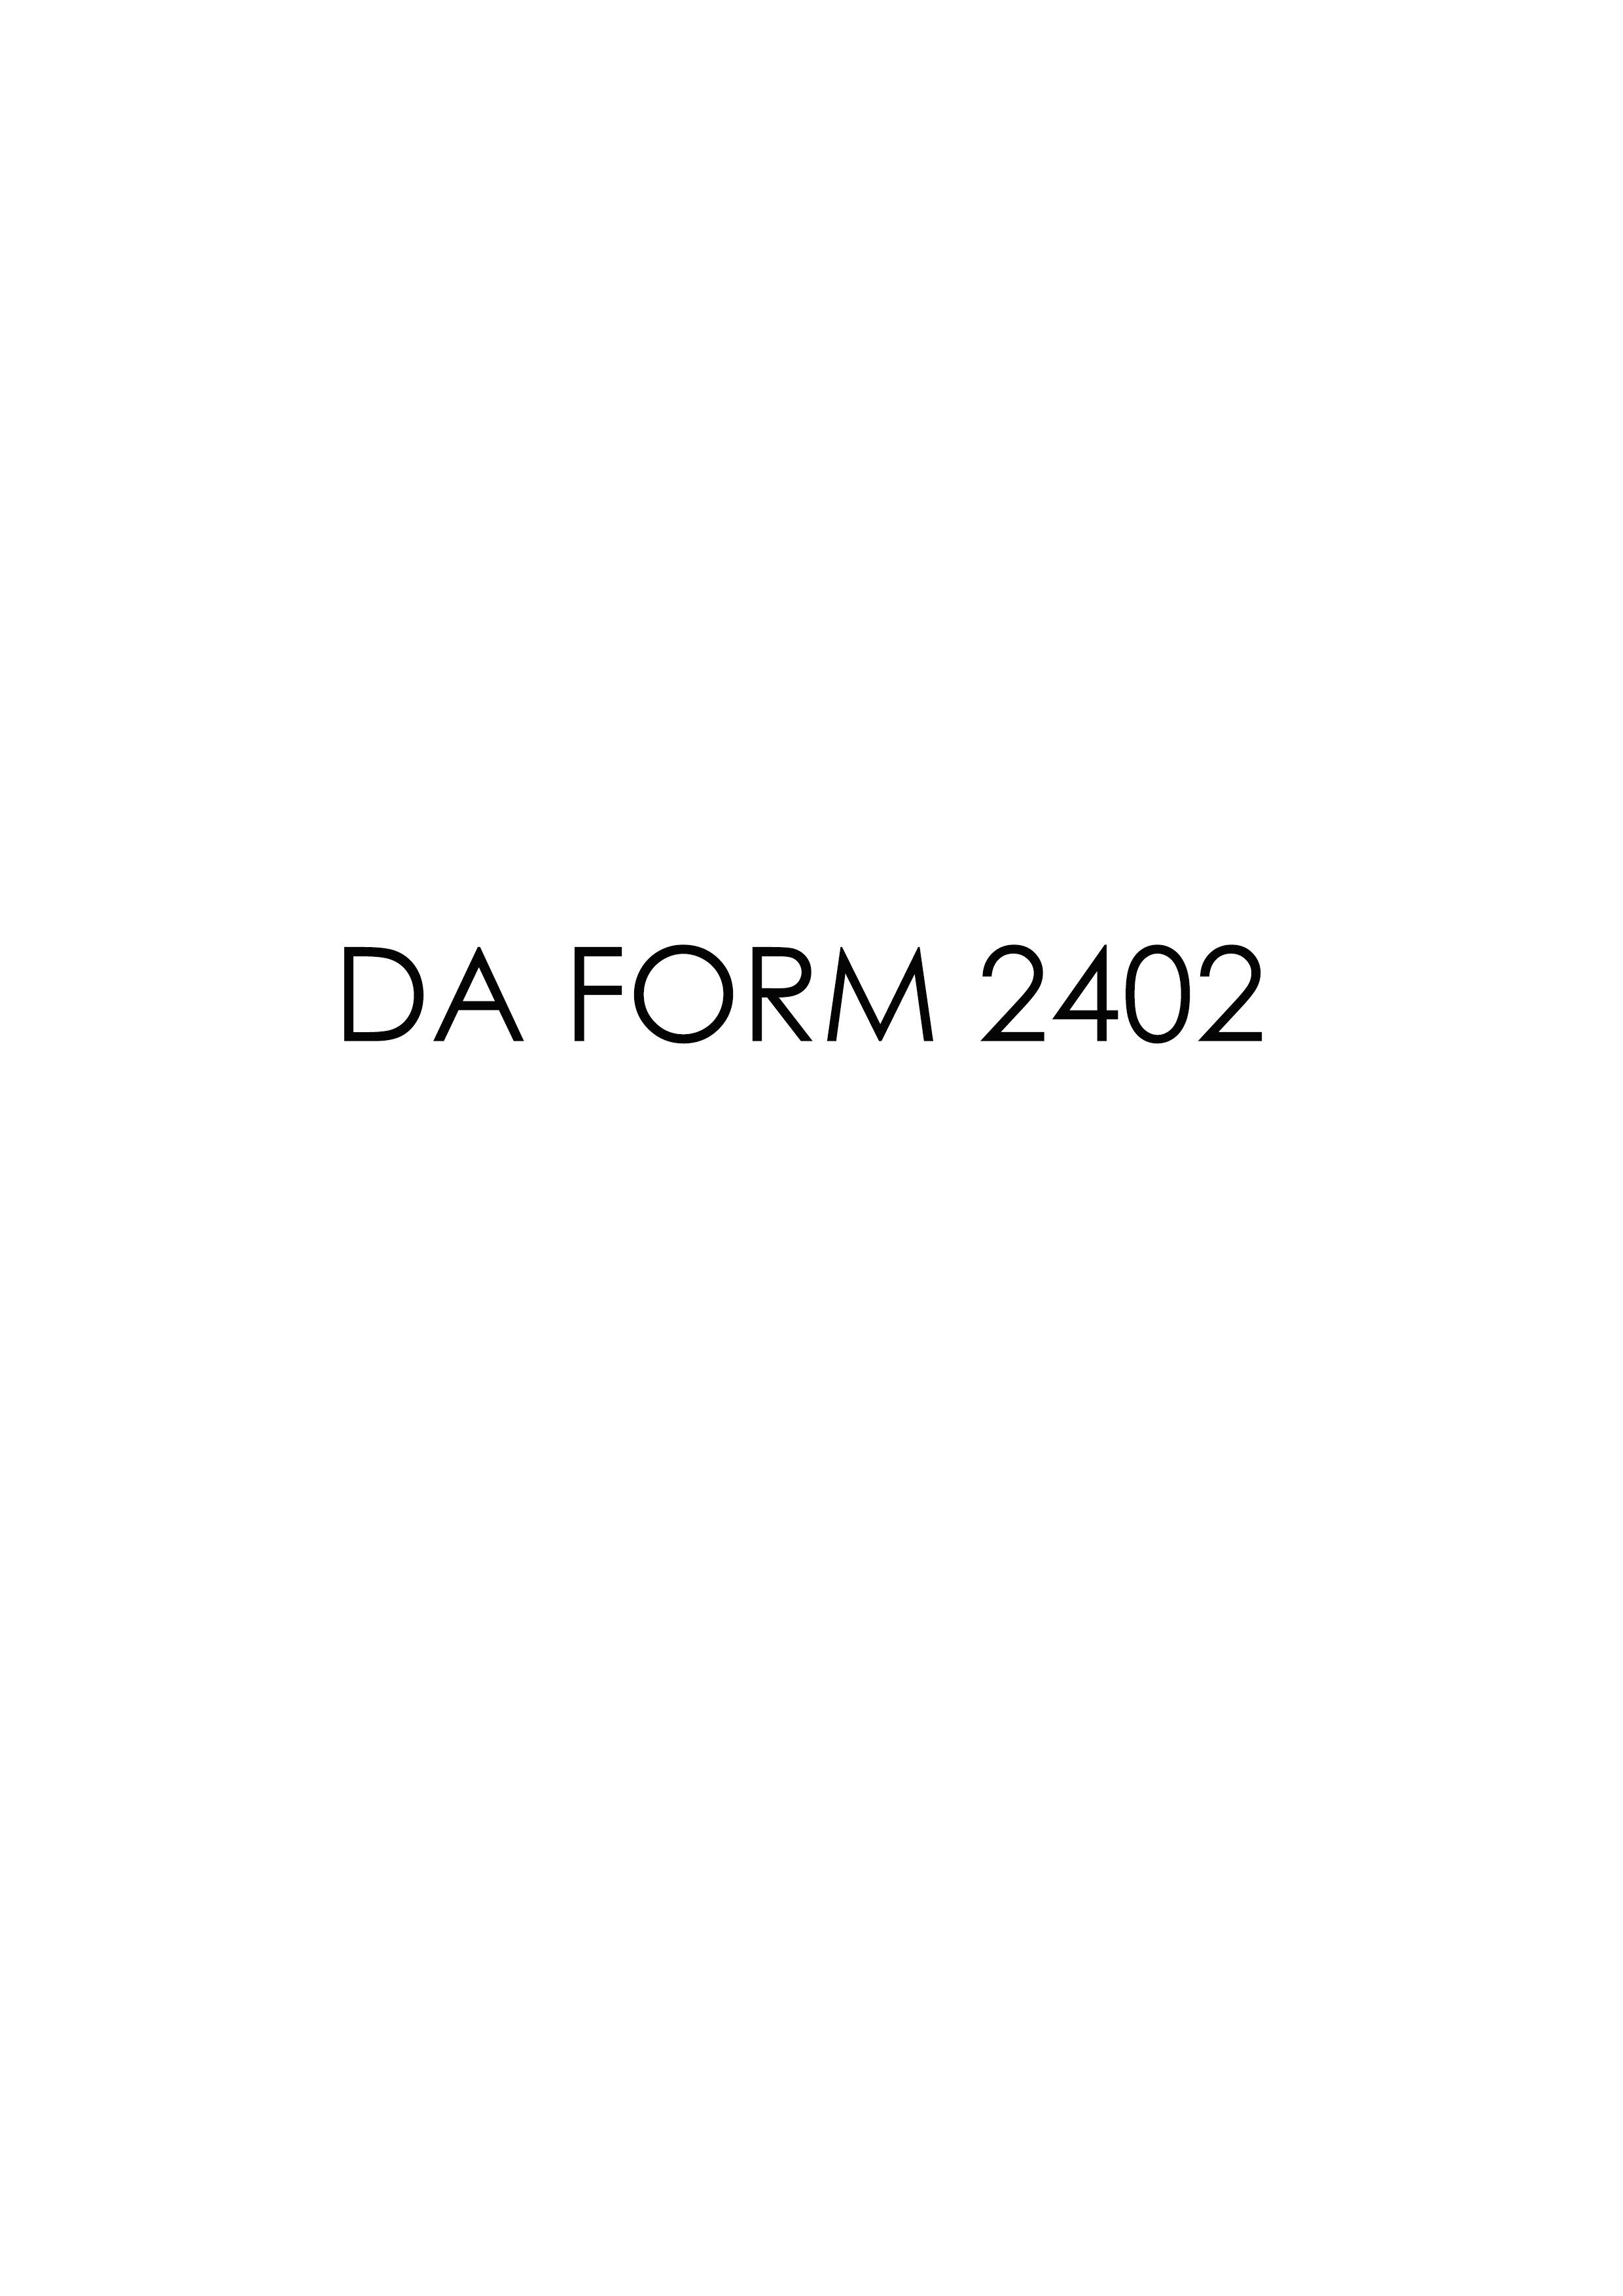 Download da 2402 Form